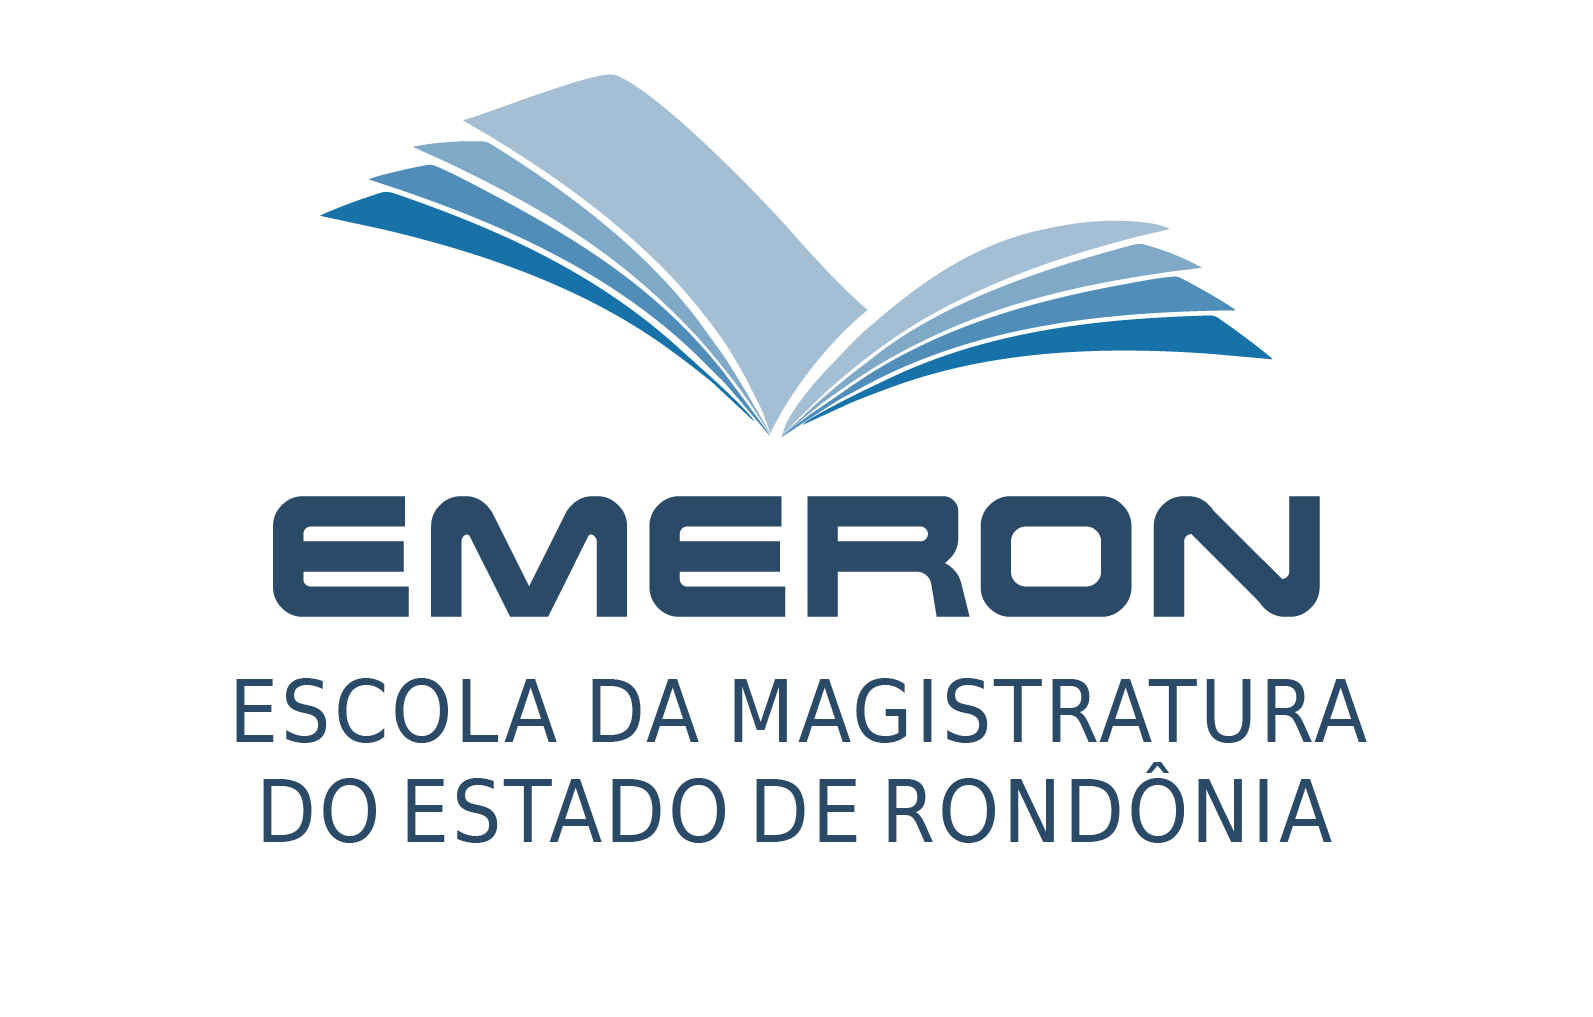 Escola da Magistratura de Rondônia - Virtual